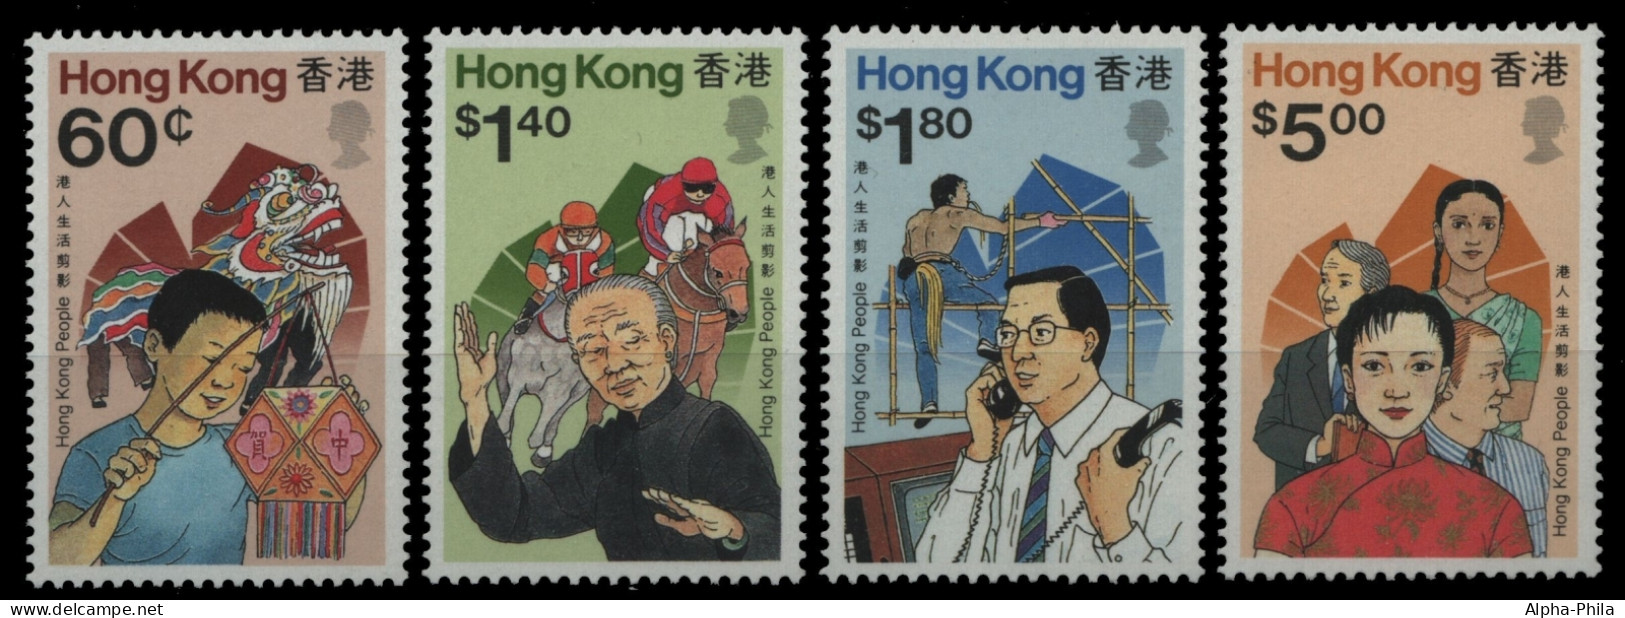 Hongkong 1989 - Mi-Nr. 567-570 ** - MNH - Leben In Hongkong - Neufs